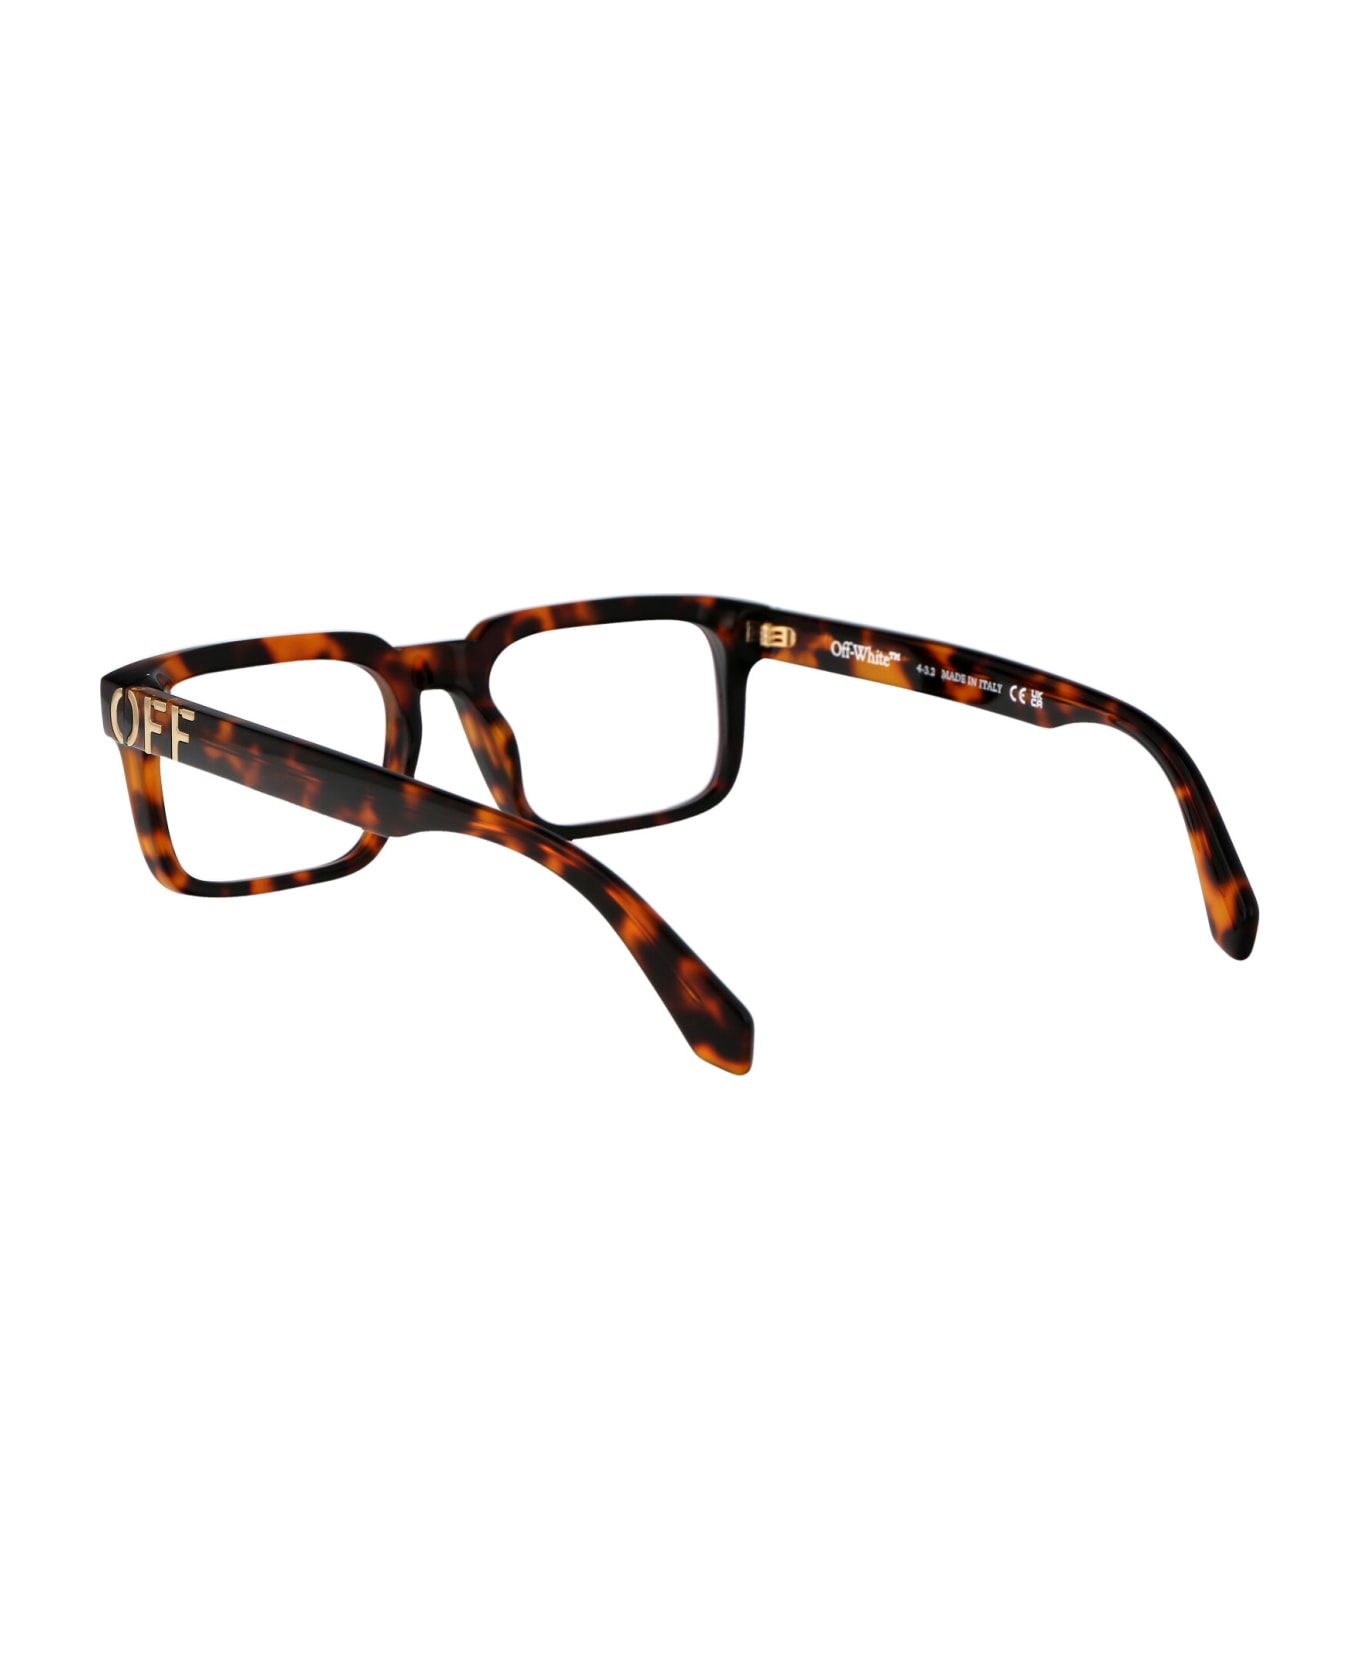 Off-White Optical Style 70 Glasses - 6000 HAVANA